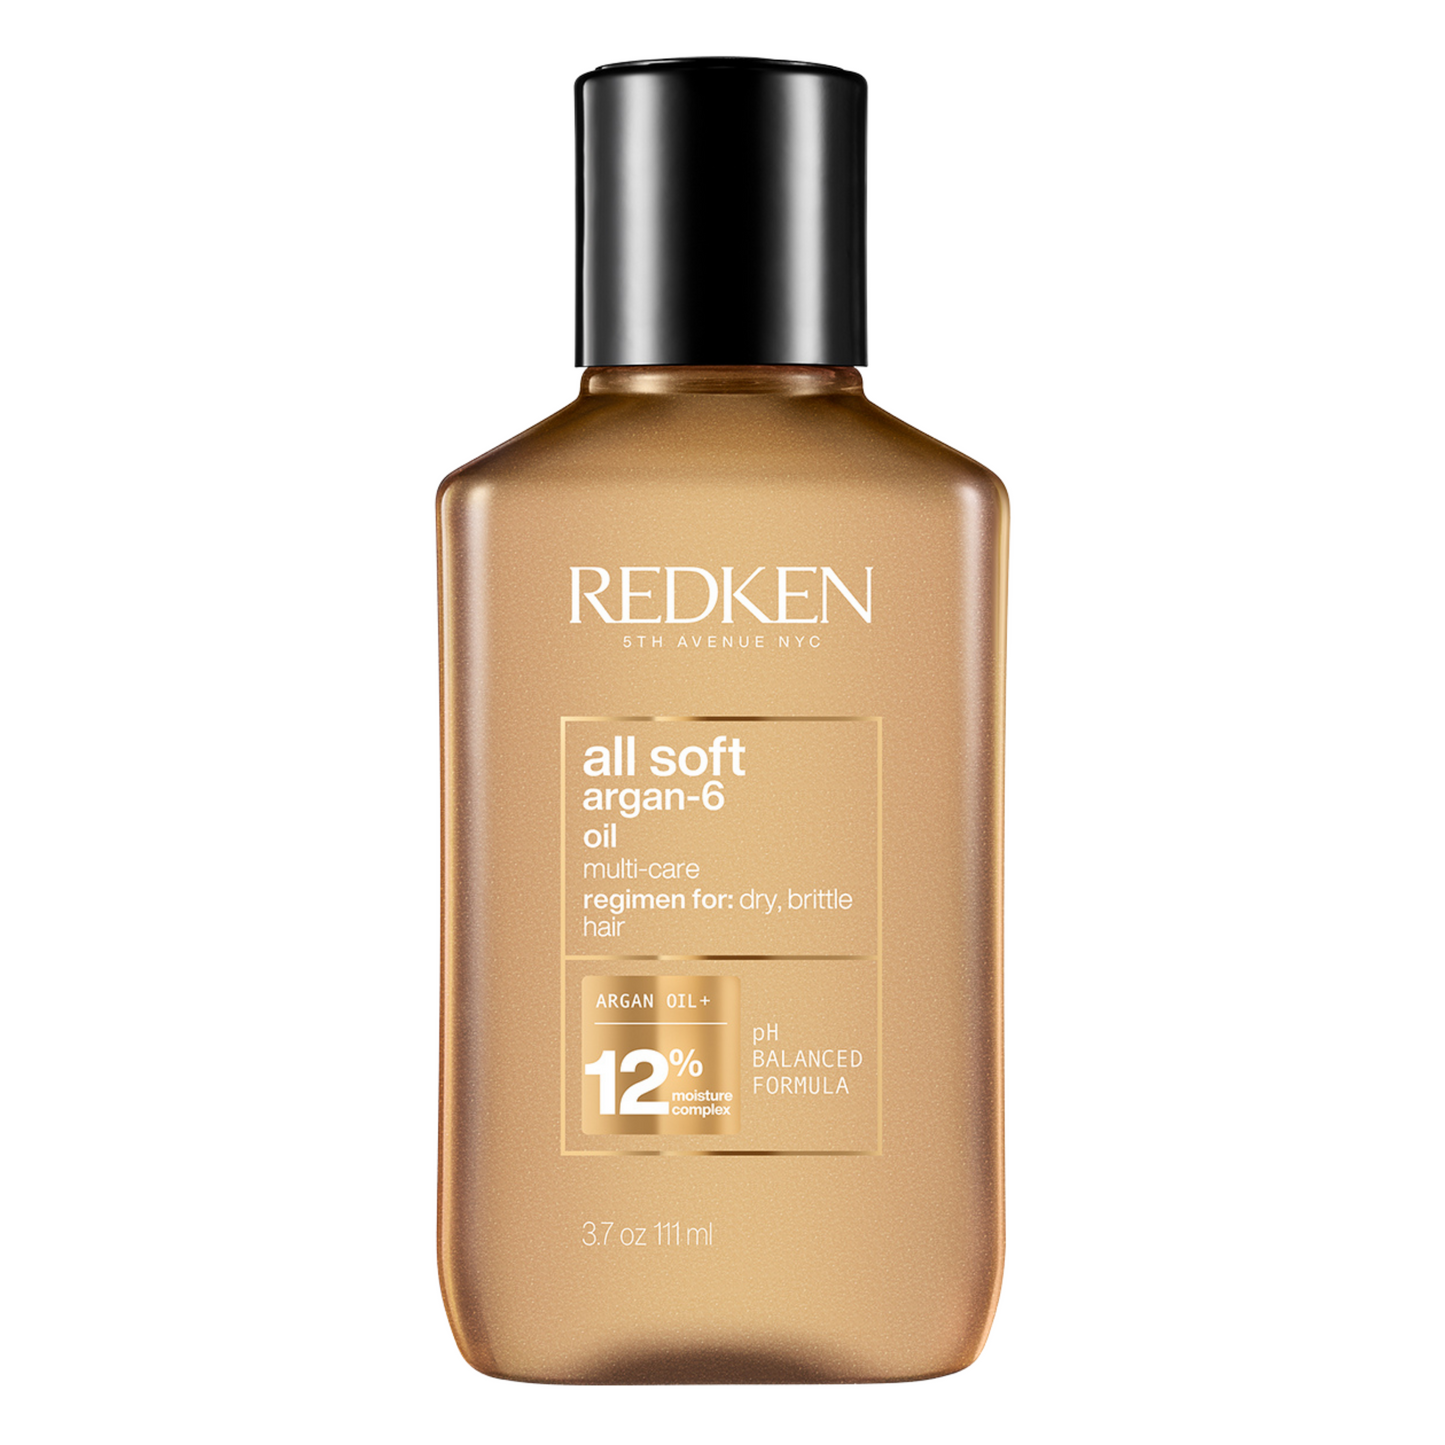 All Soft Argan-6 Hair Oil/ Redken